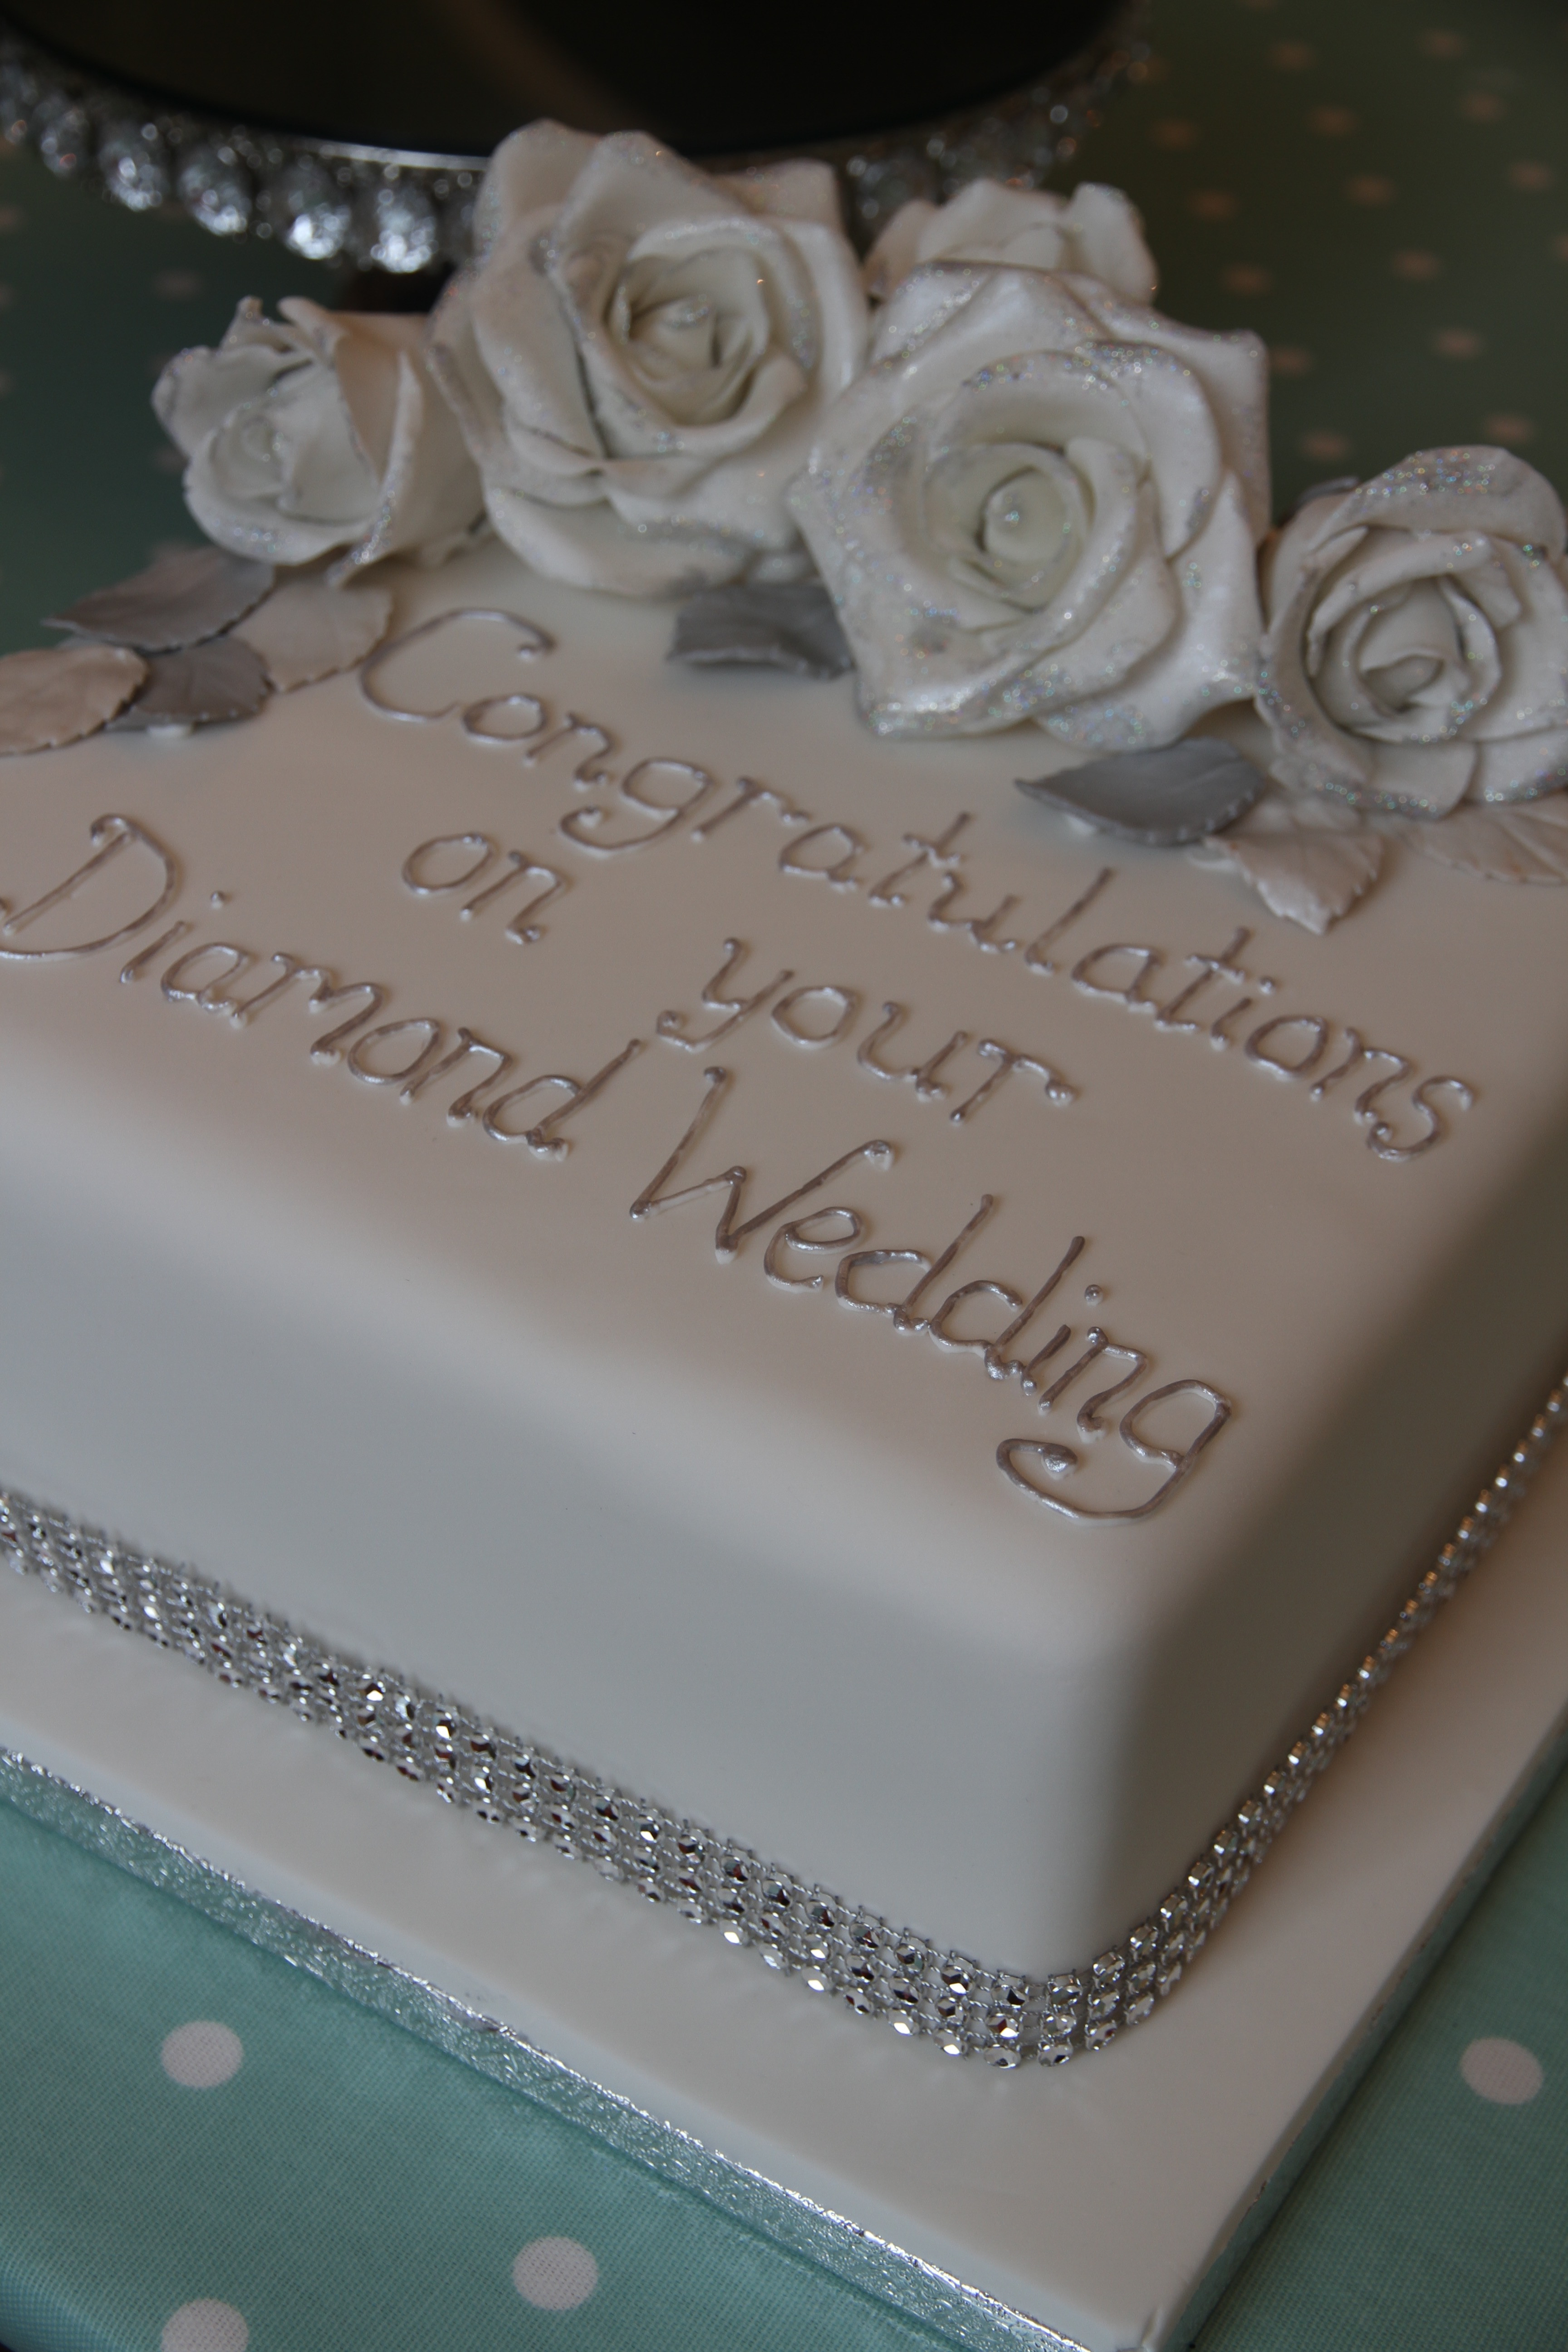 Diamonds Wedding Cakes
 Gallery The Flying Pig Cake EmporiumThe Flying Pig Cake